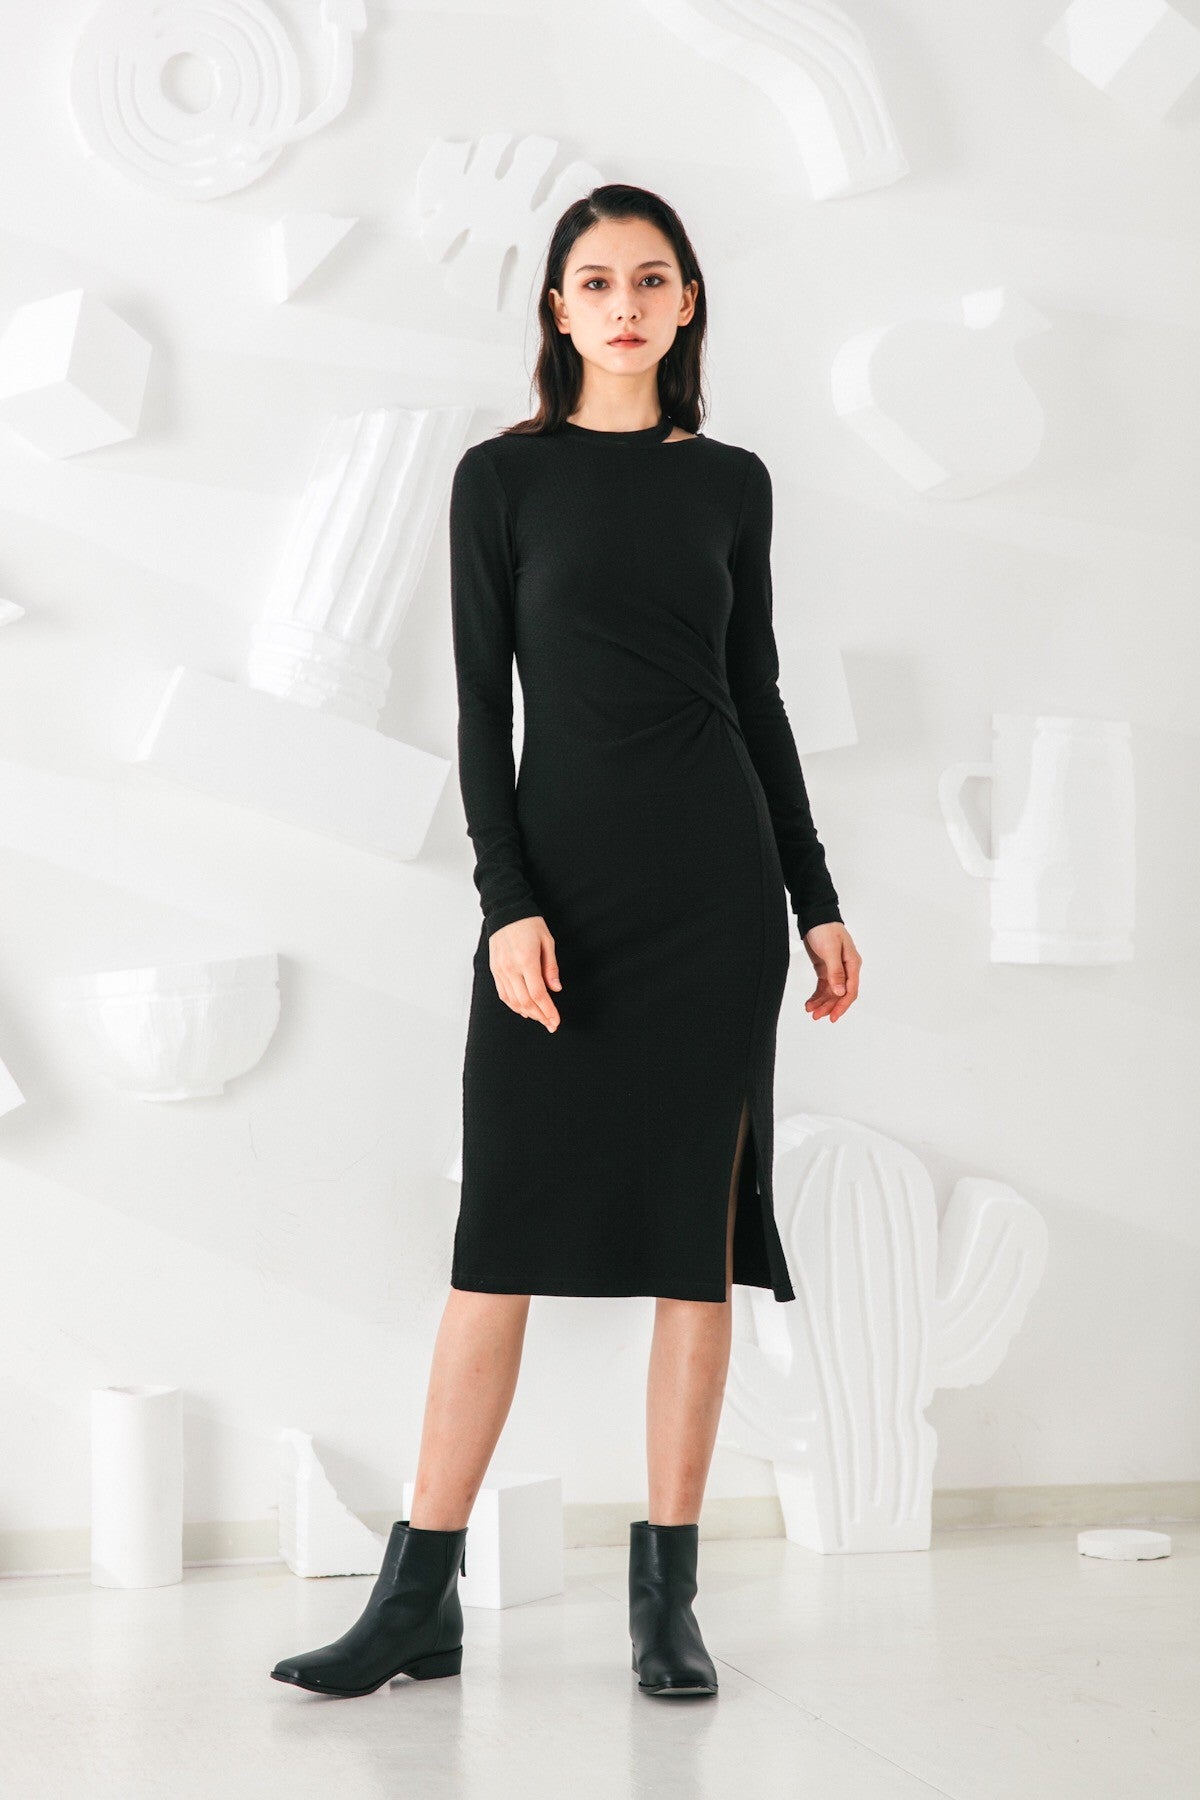 SKYE San Francisco SF shop ethical modern minimalist quality women clothing fashion Mélanie Dress black 4